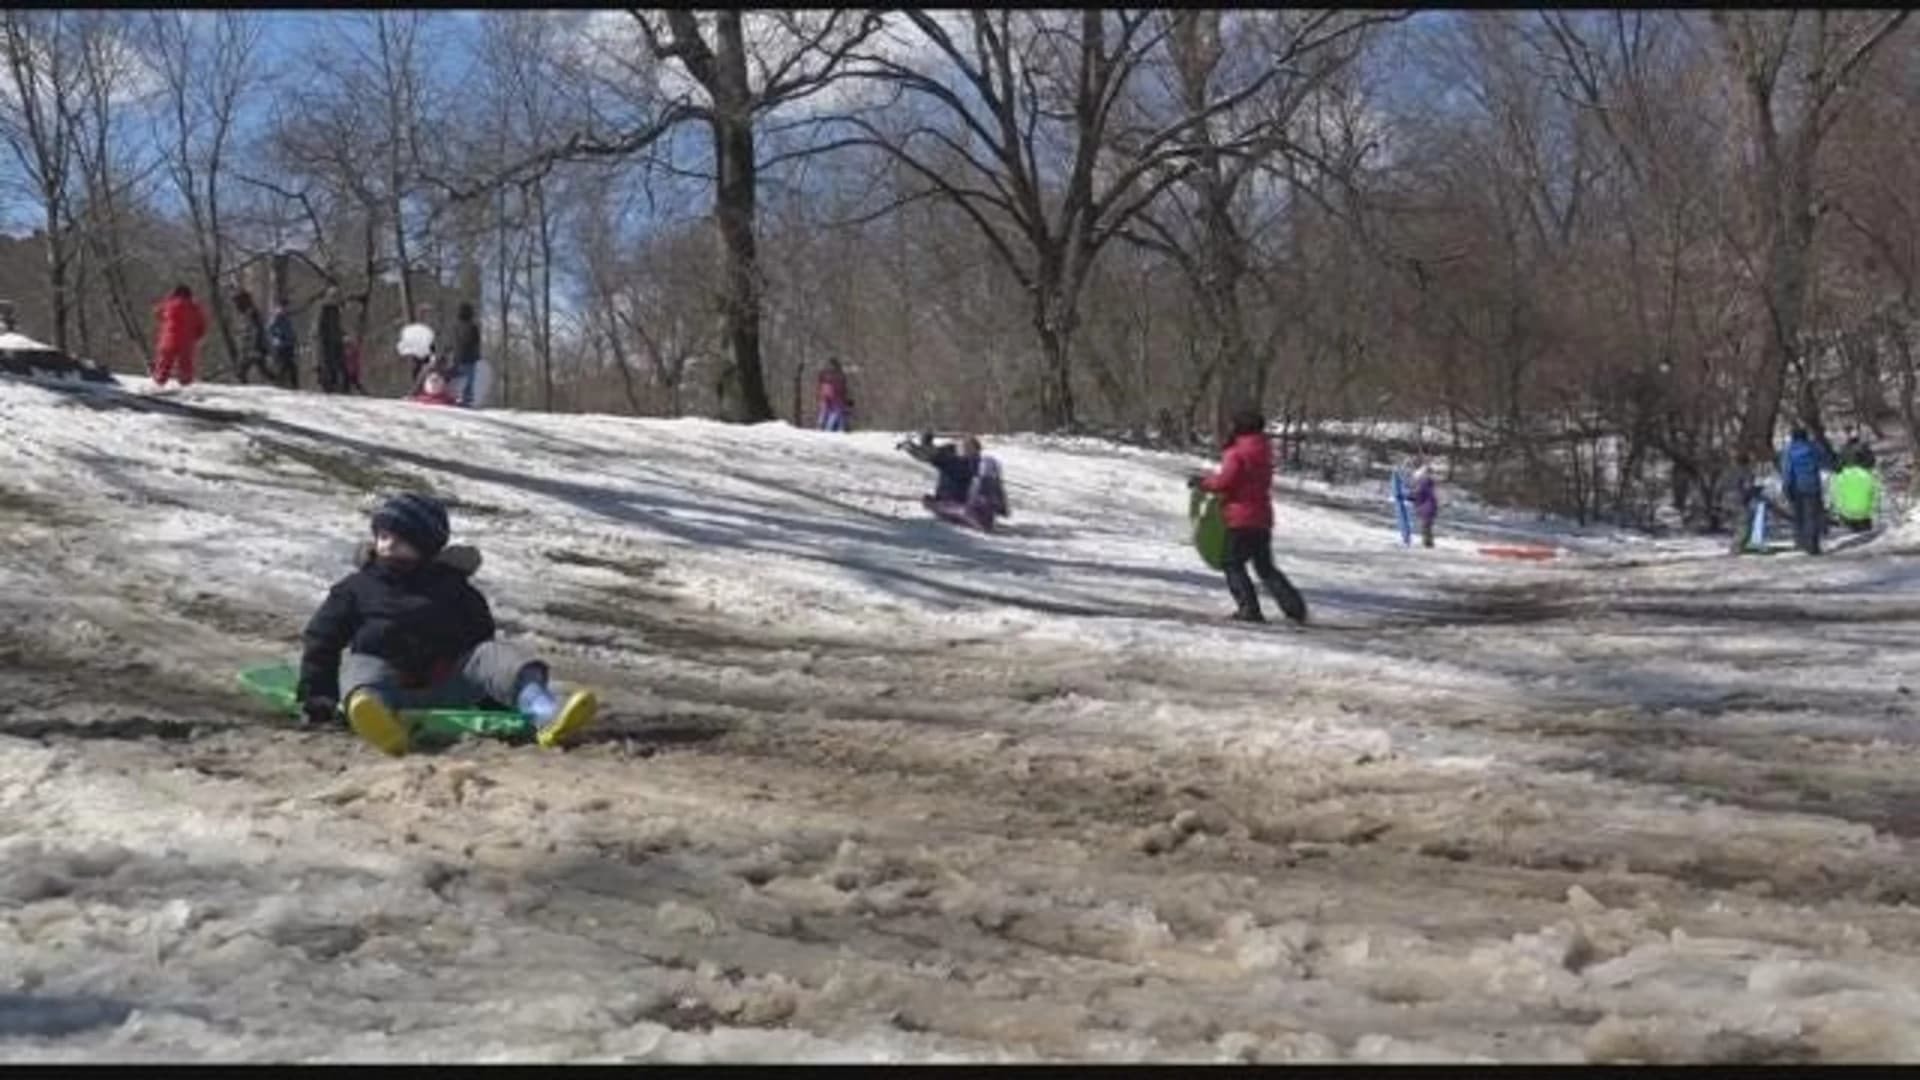 Dozens of children embrace snow day at Prospect Park